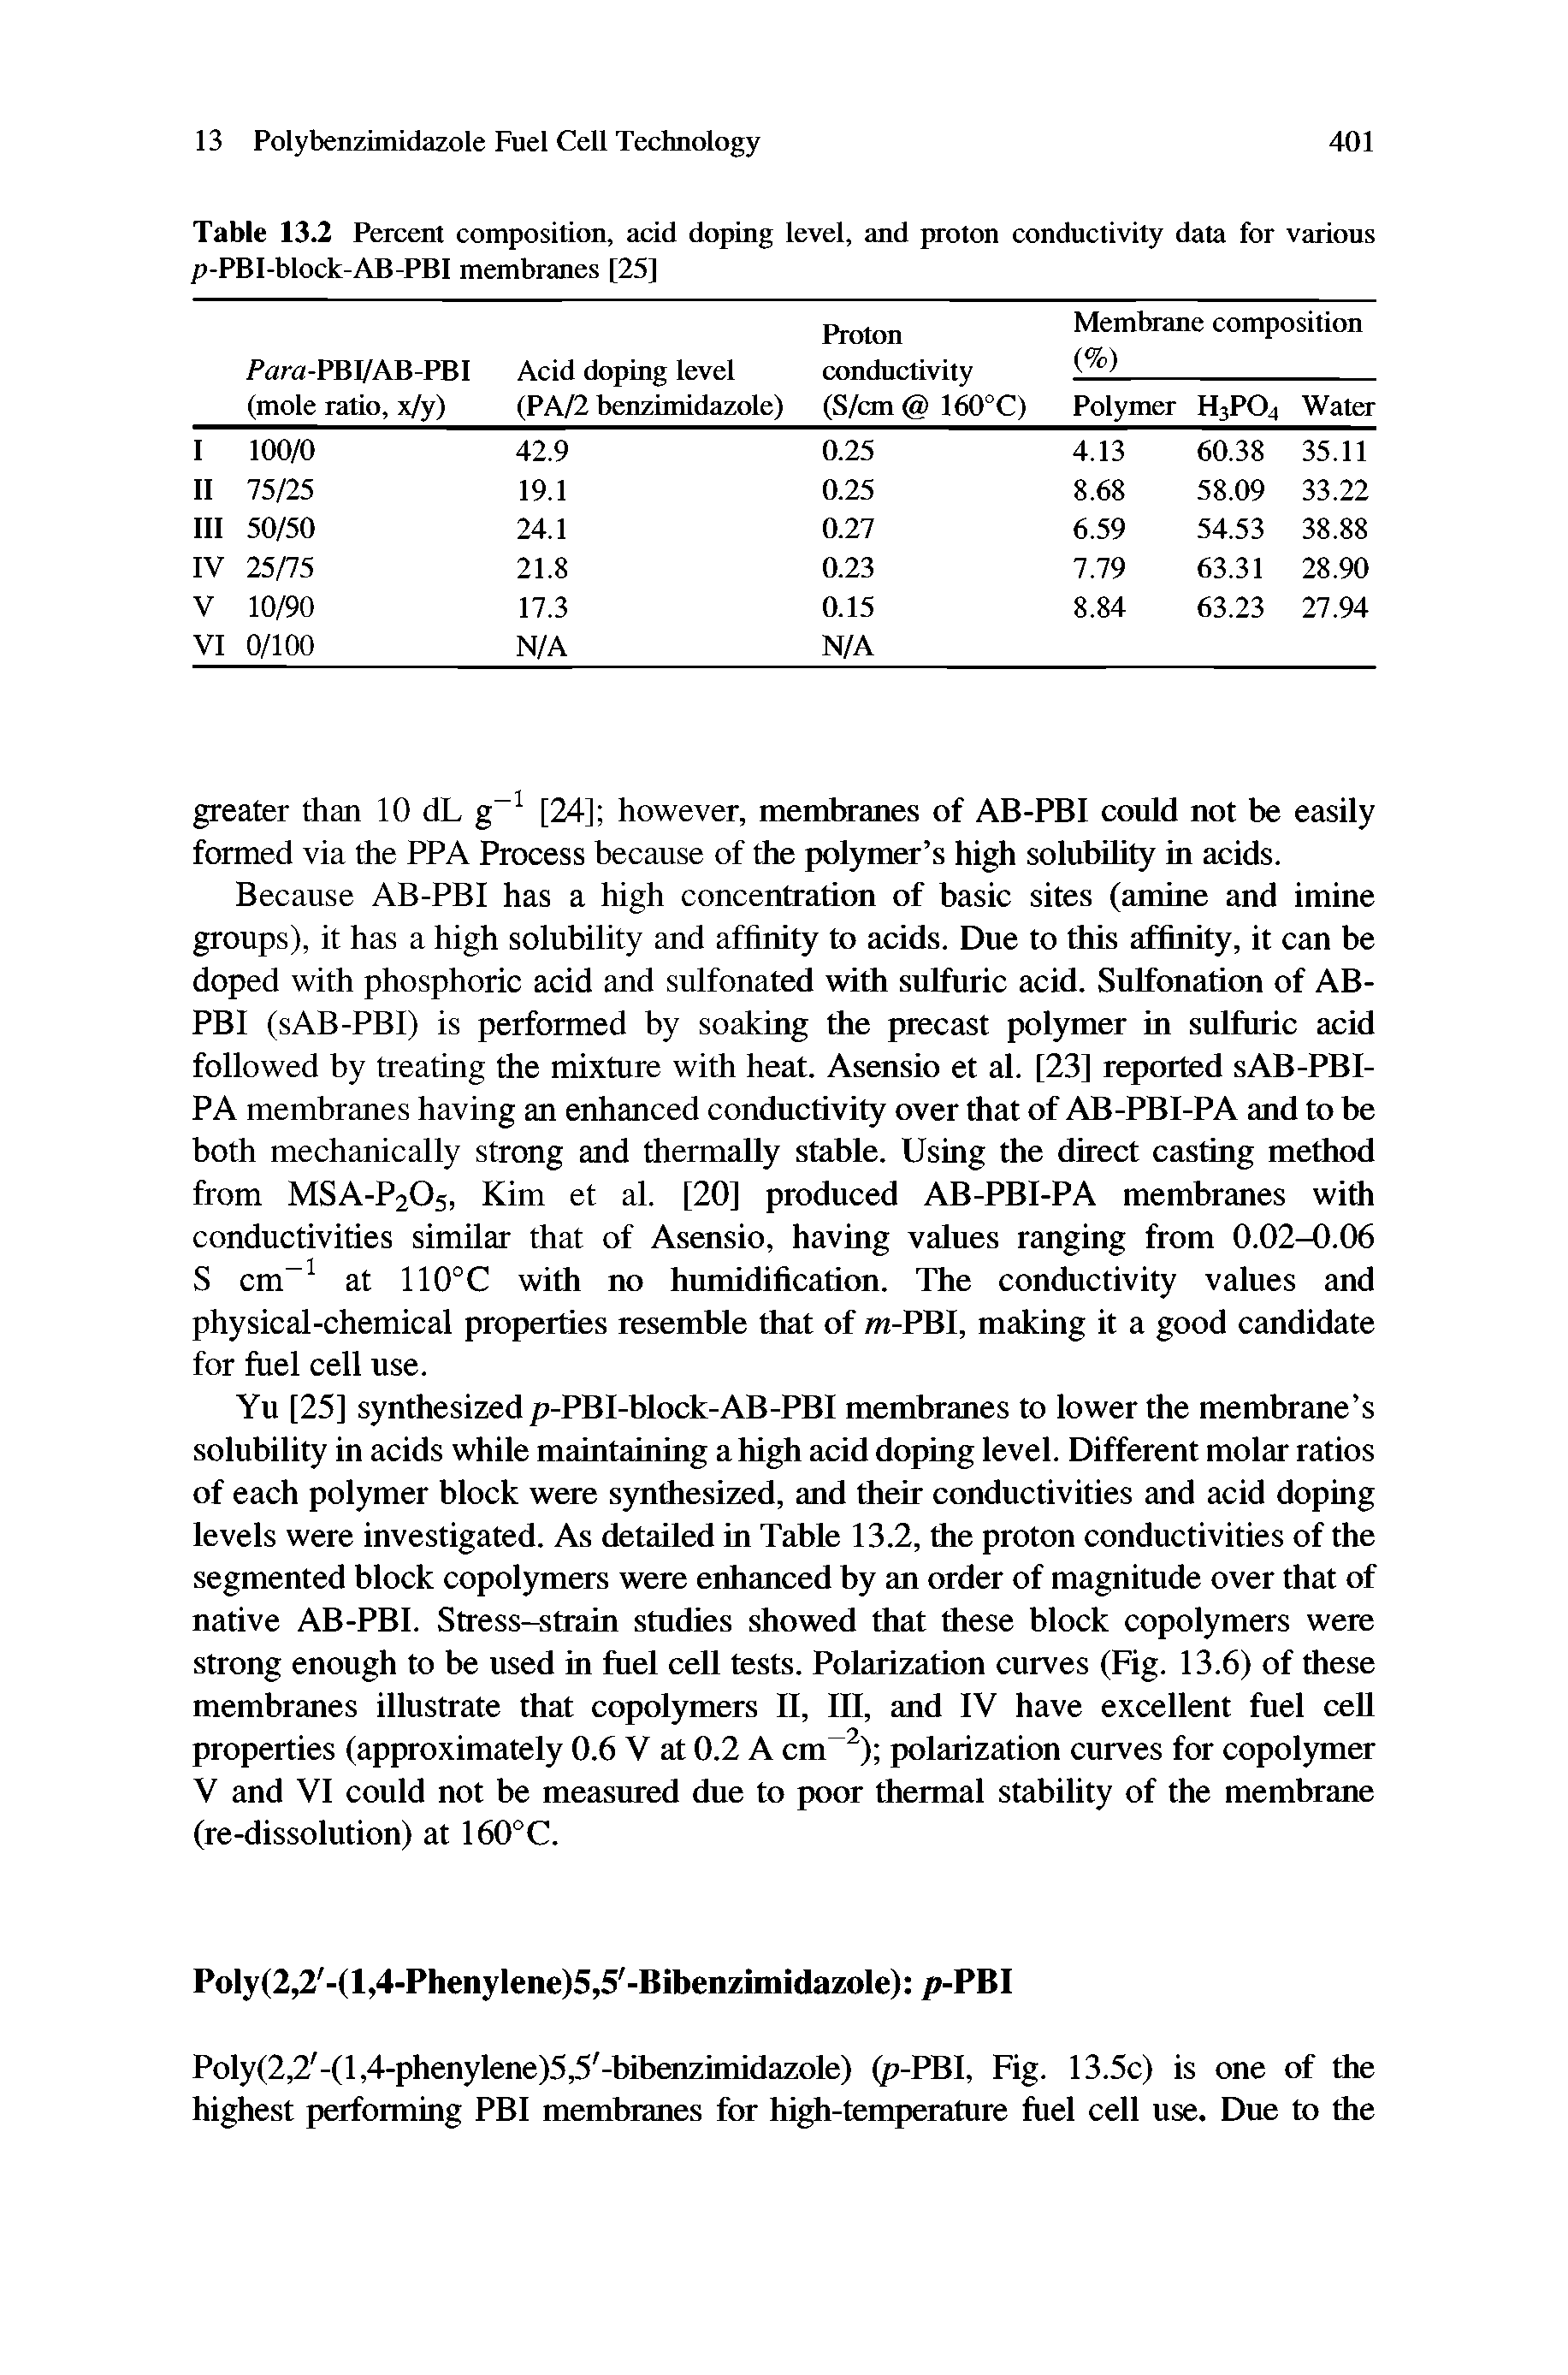 Table 13.2 Percent composition, acid doping level, and proton conductivity data for various p-PBI-block-AB-PBI membranes [25]...